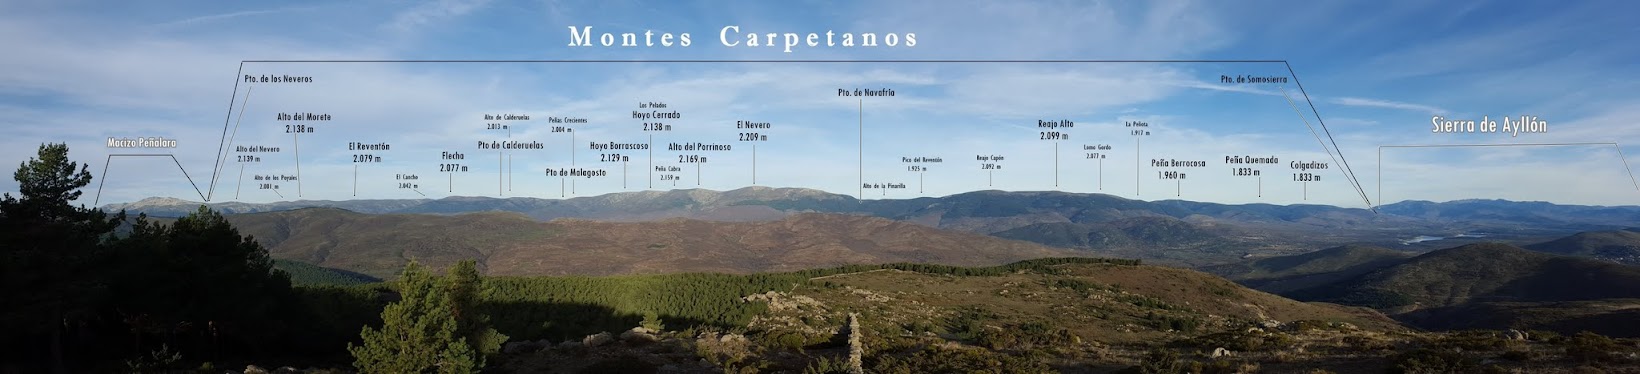 Montes Carpetanos